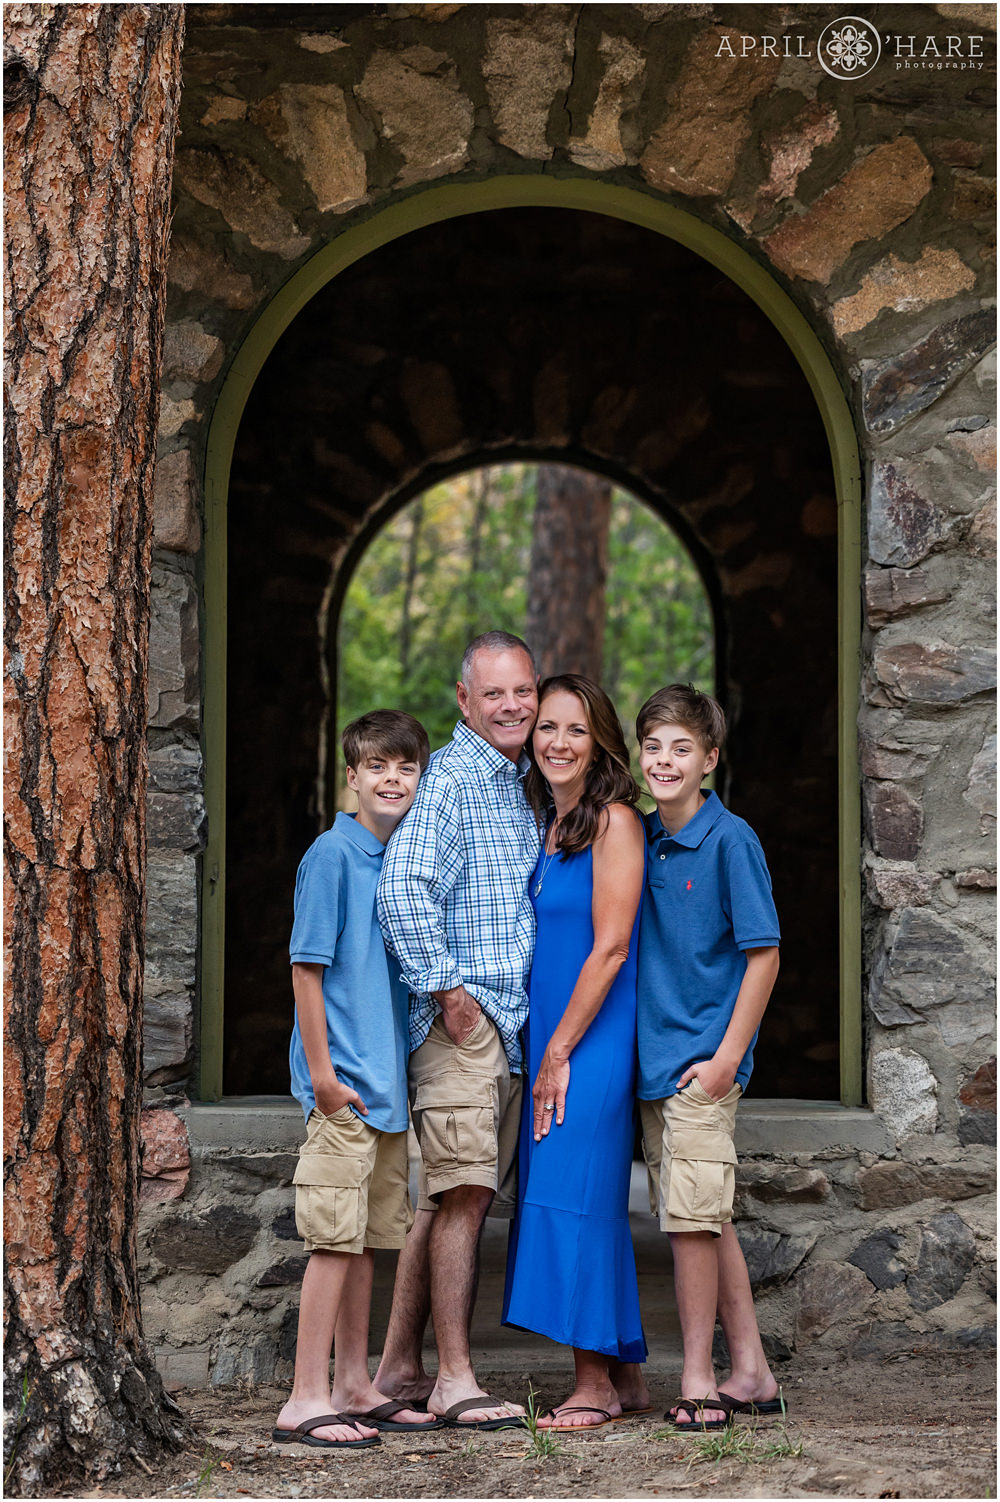 Viestenz-Smith Mountain Park Stone Archway backdrop for a family portrait in Loveland Colorado